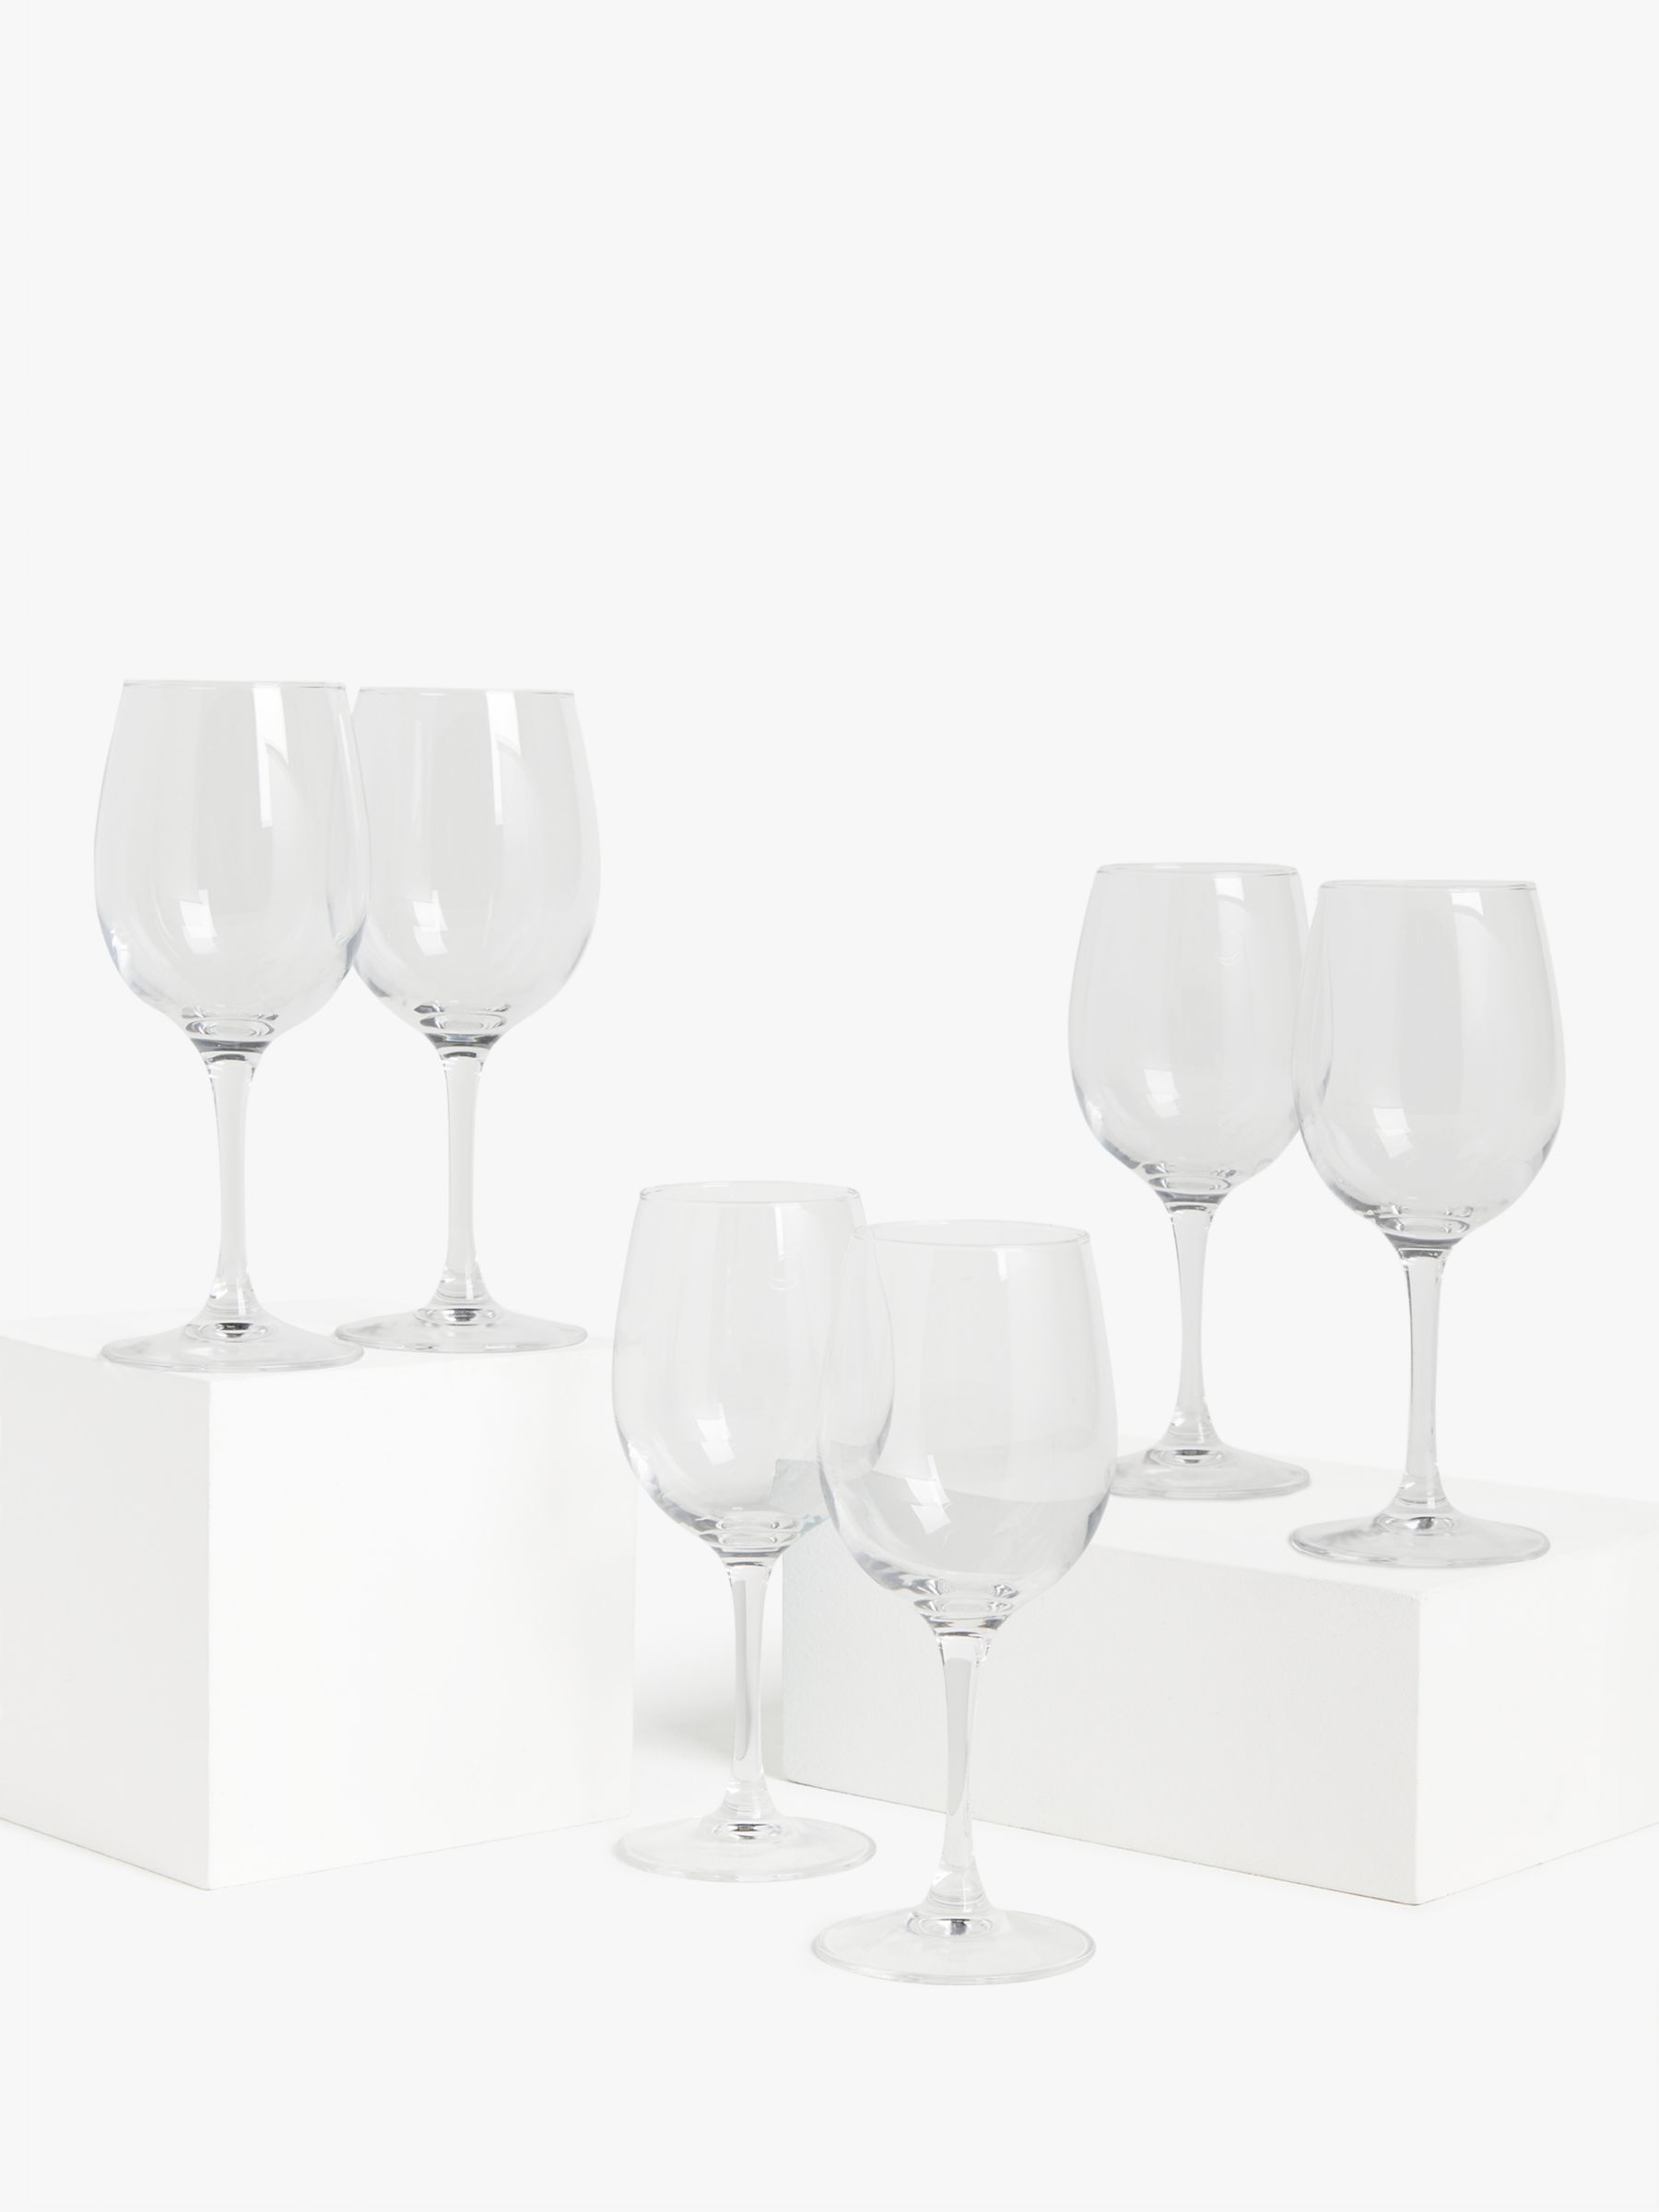 John Lewis ANYDAY Wine Glasses, Set of 6, 350ml